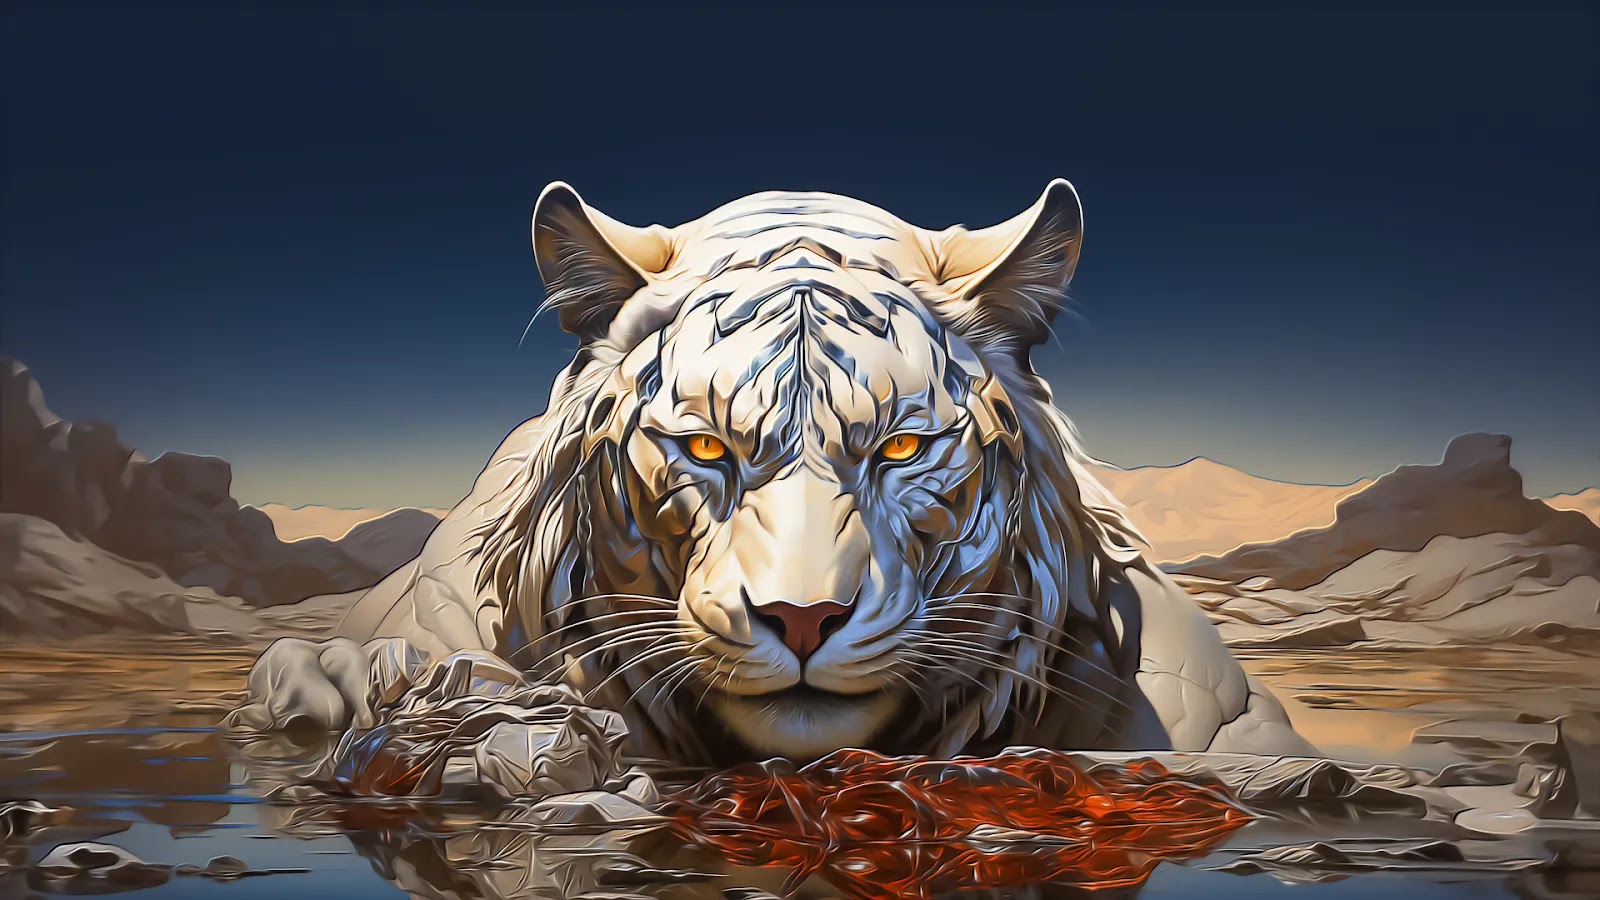 white tiger illustration 3840x2160 pixels PC WALLPAPER 4K